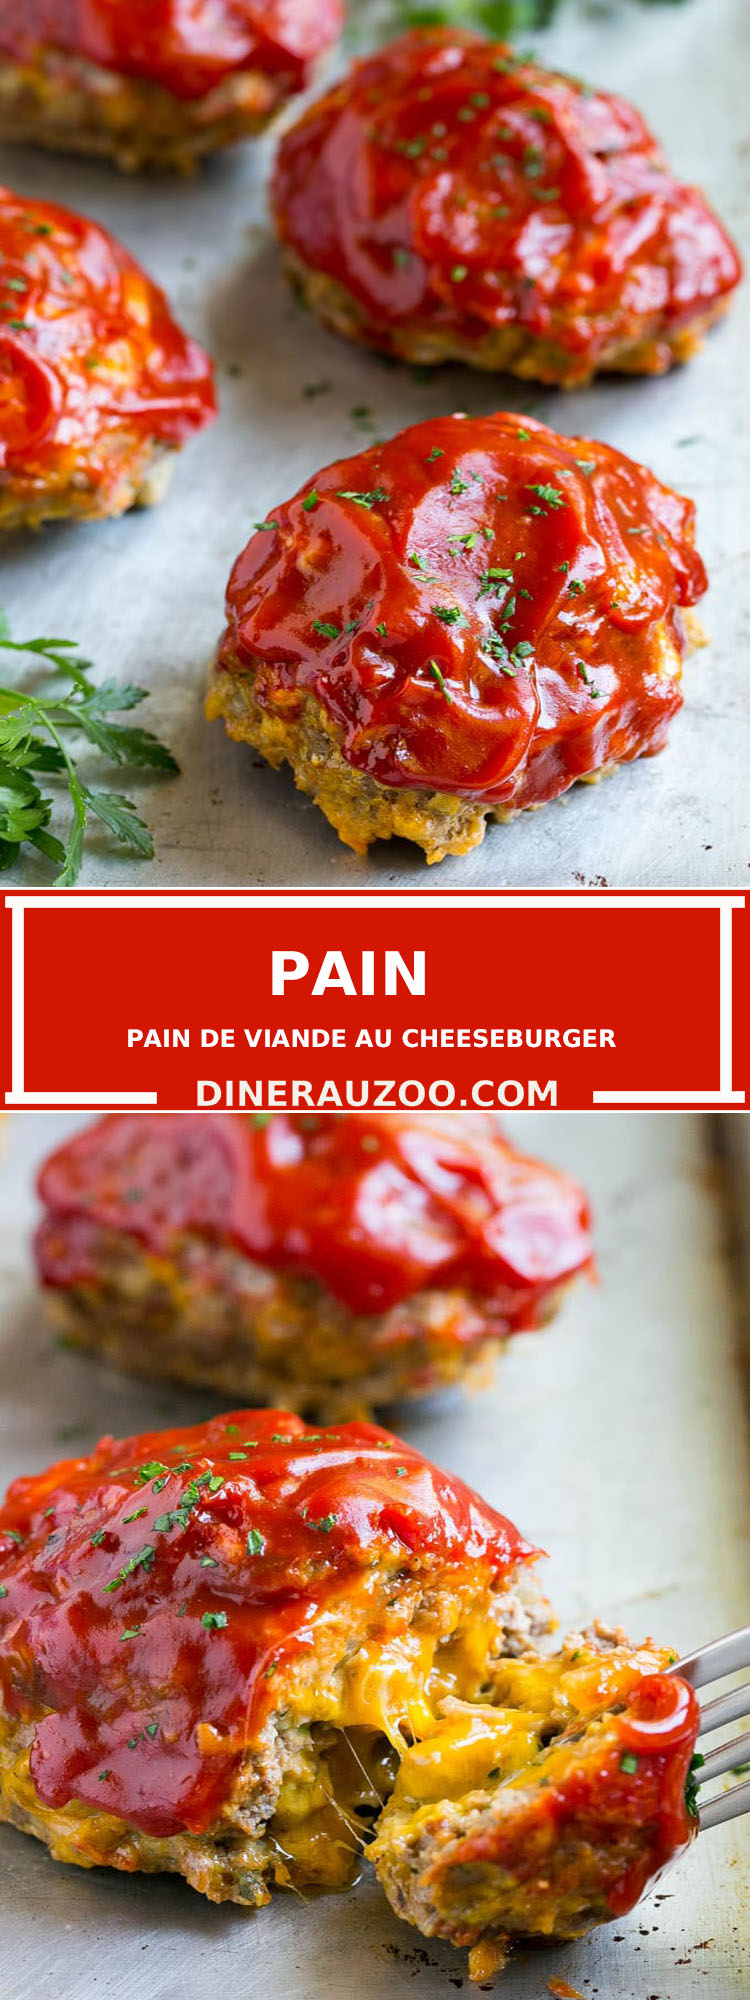 Pain de viande au cheeseburger1